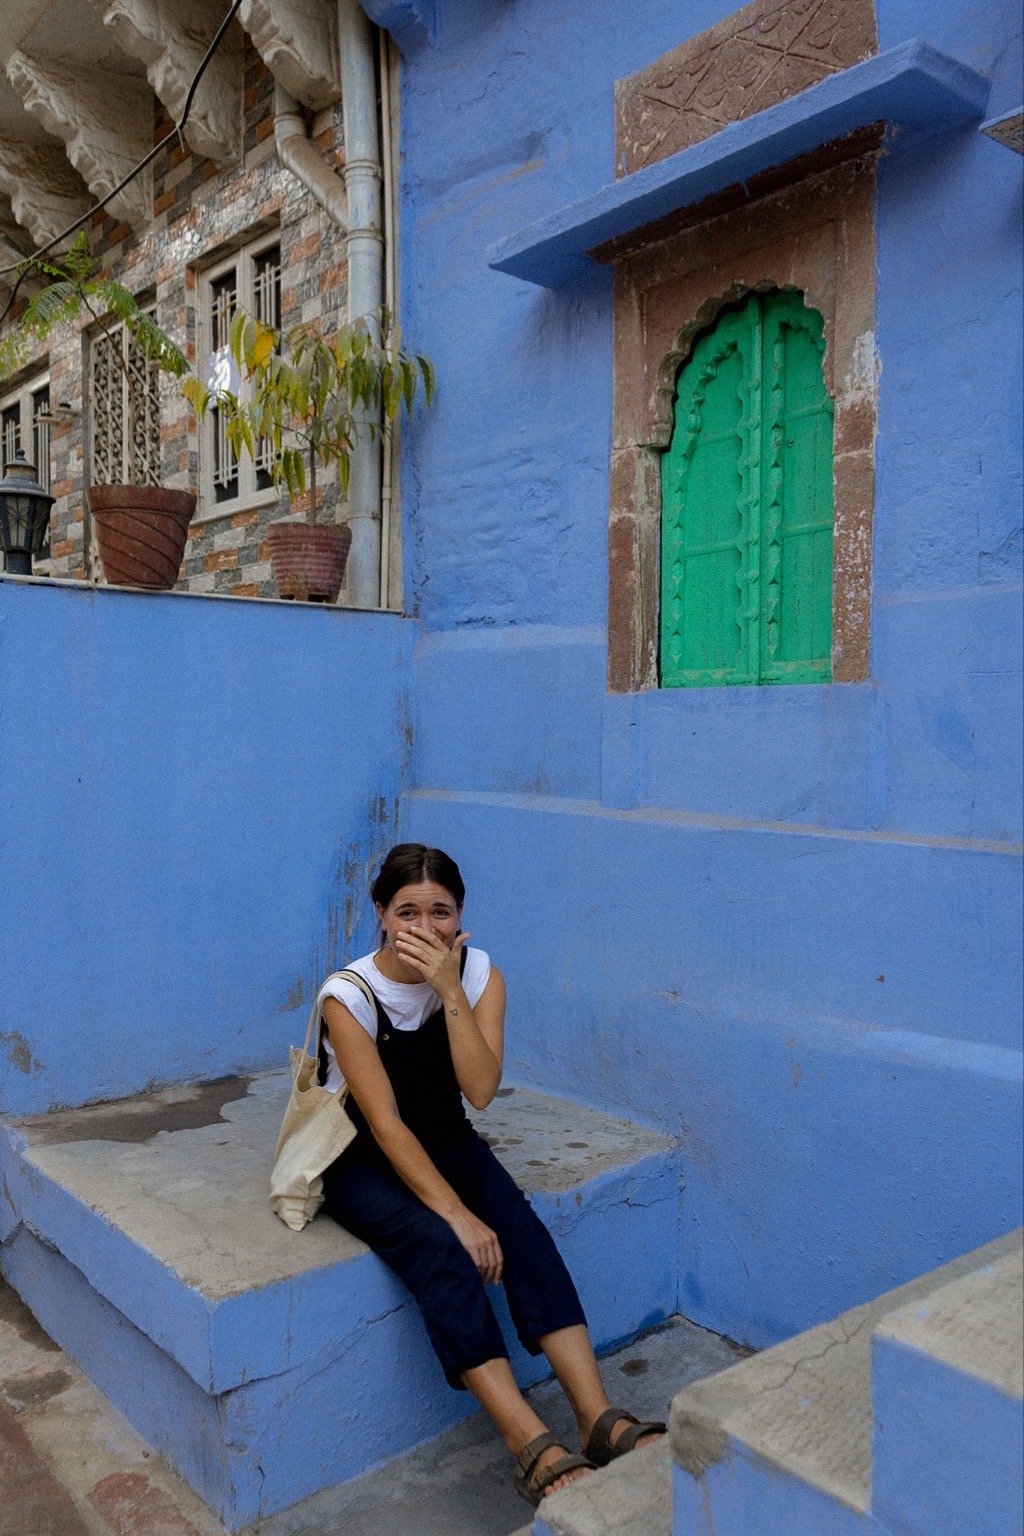 the Blue City, Udaipur